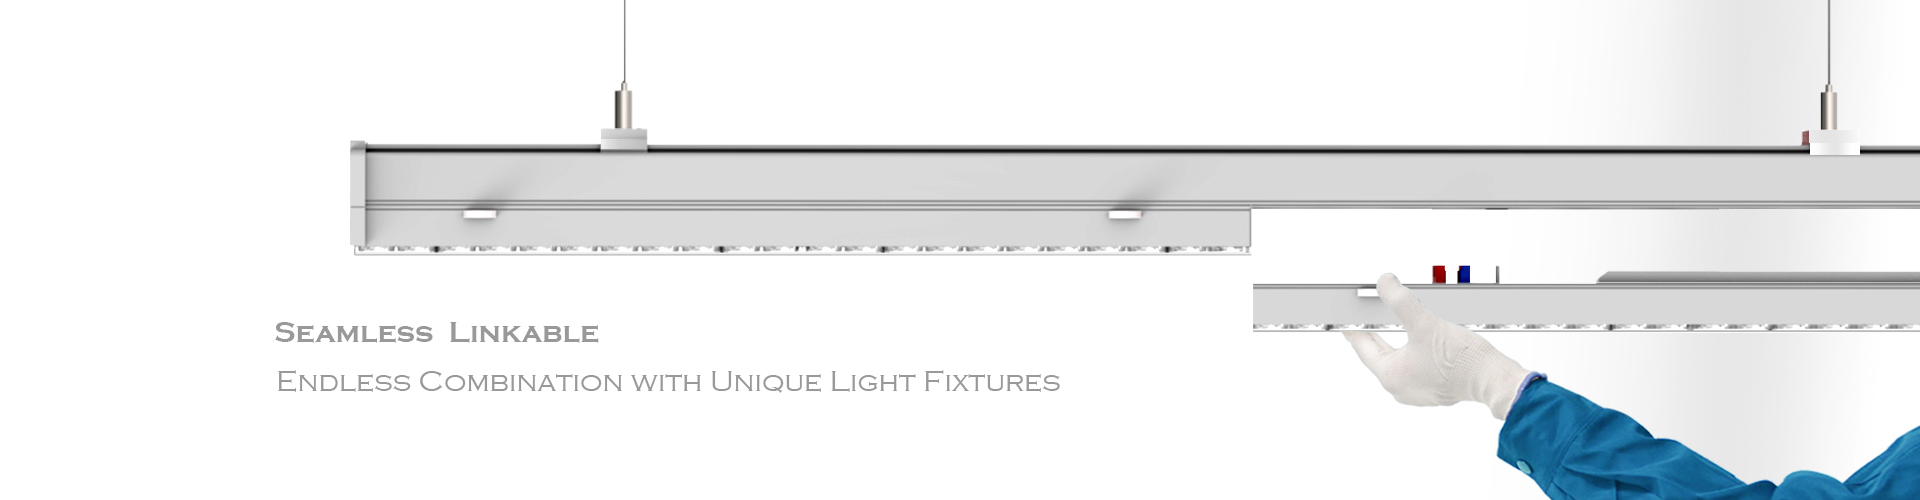 Seamless Linkable LED Linear  Trunk Lighting